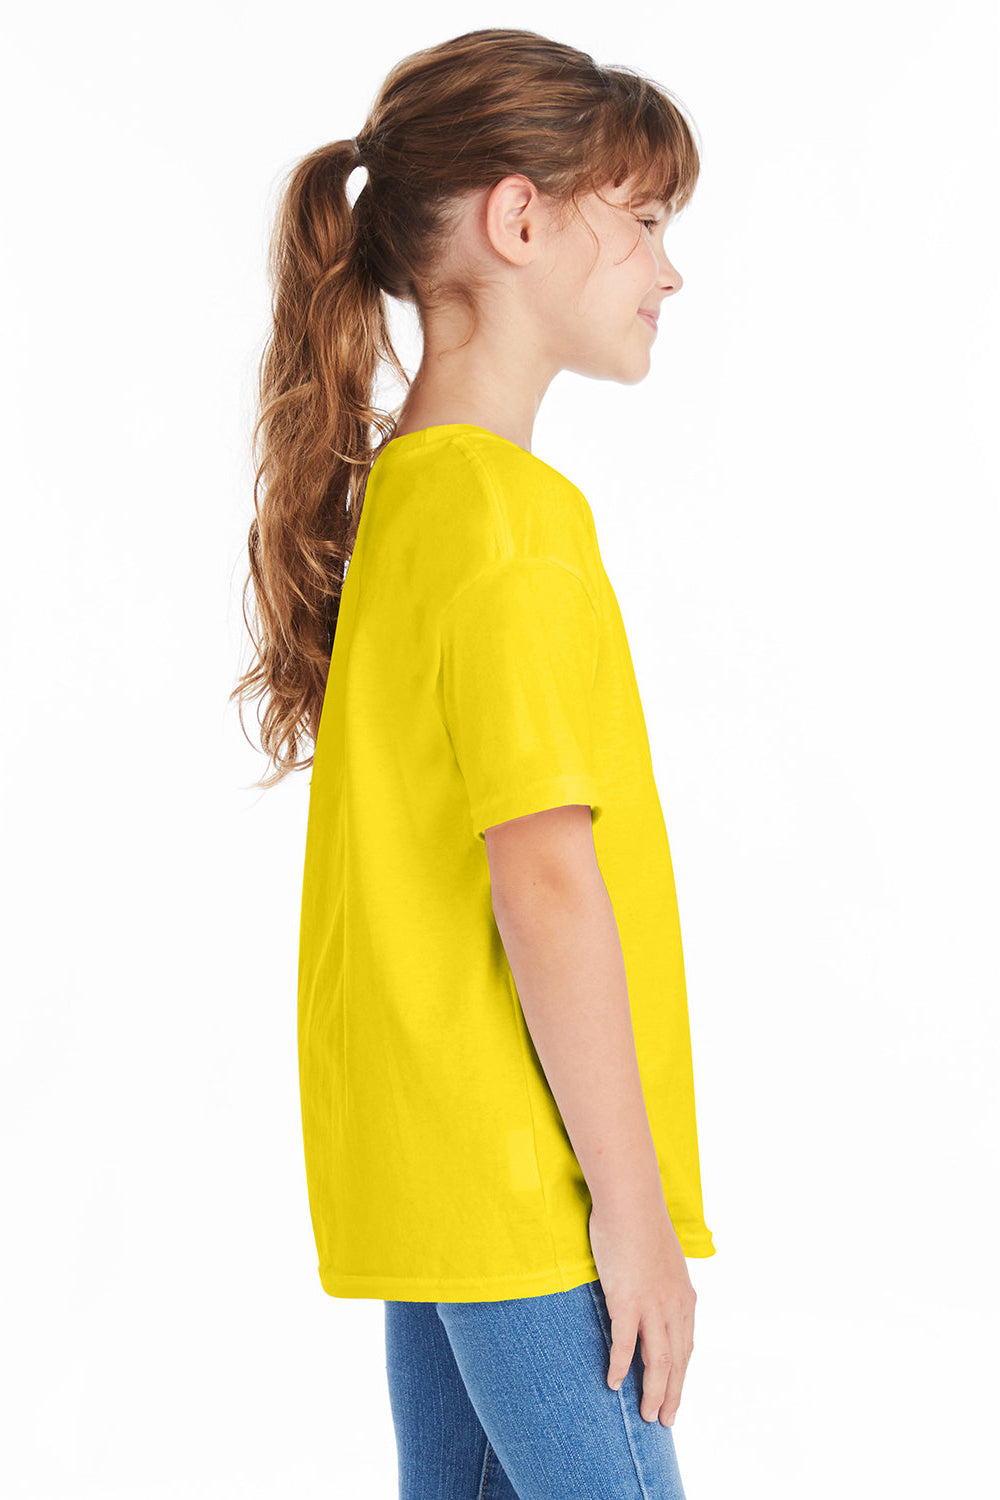 Hanes 5480 Youth ComfortSoft Short Sleeve Crewneck T-Shirt Athletic Yellow SIde